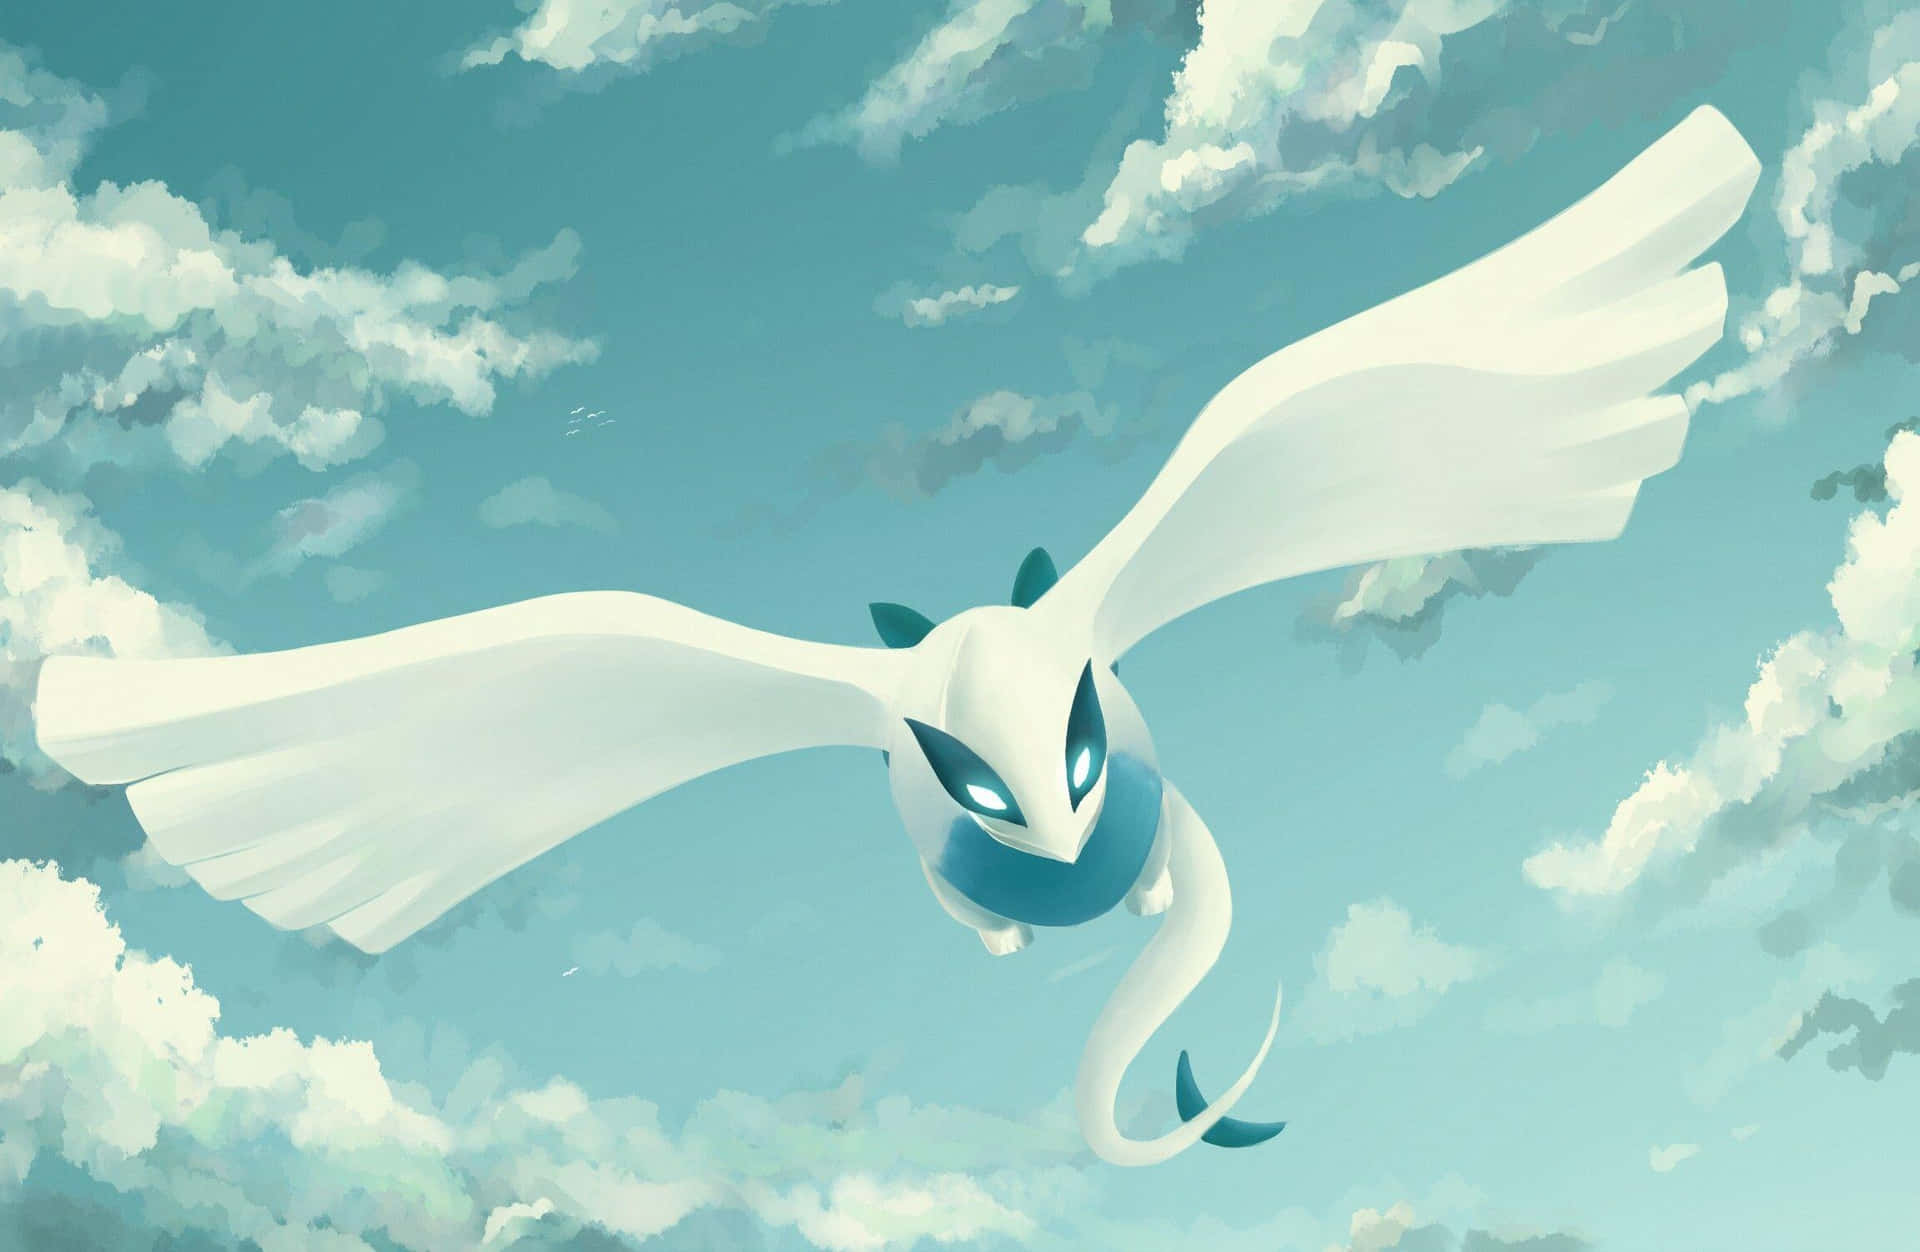 Feel the power of the Legendary Pokémon, Lugia!